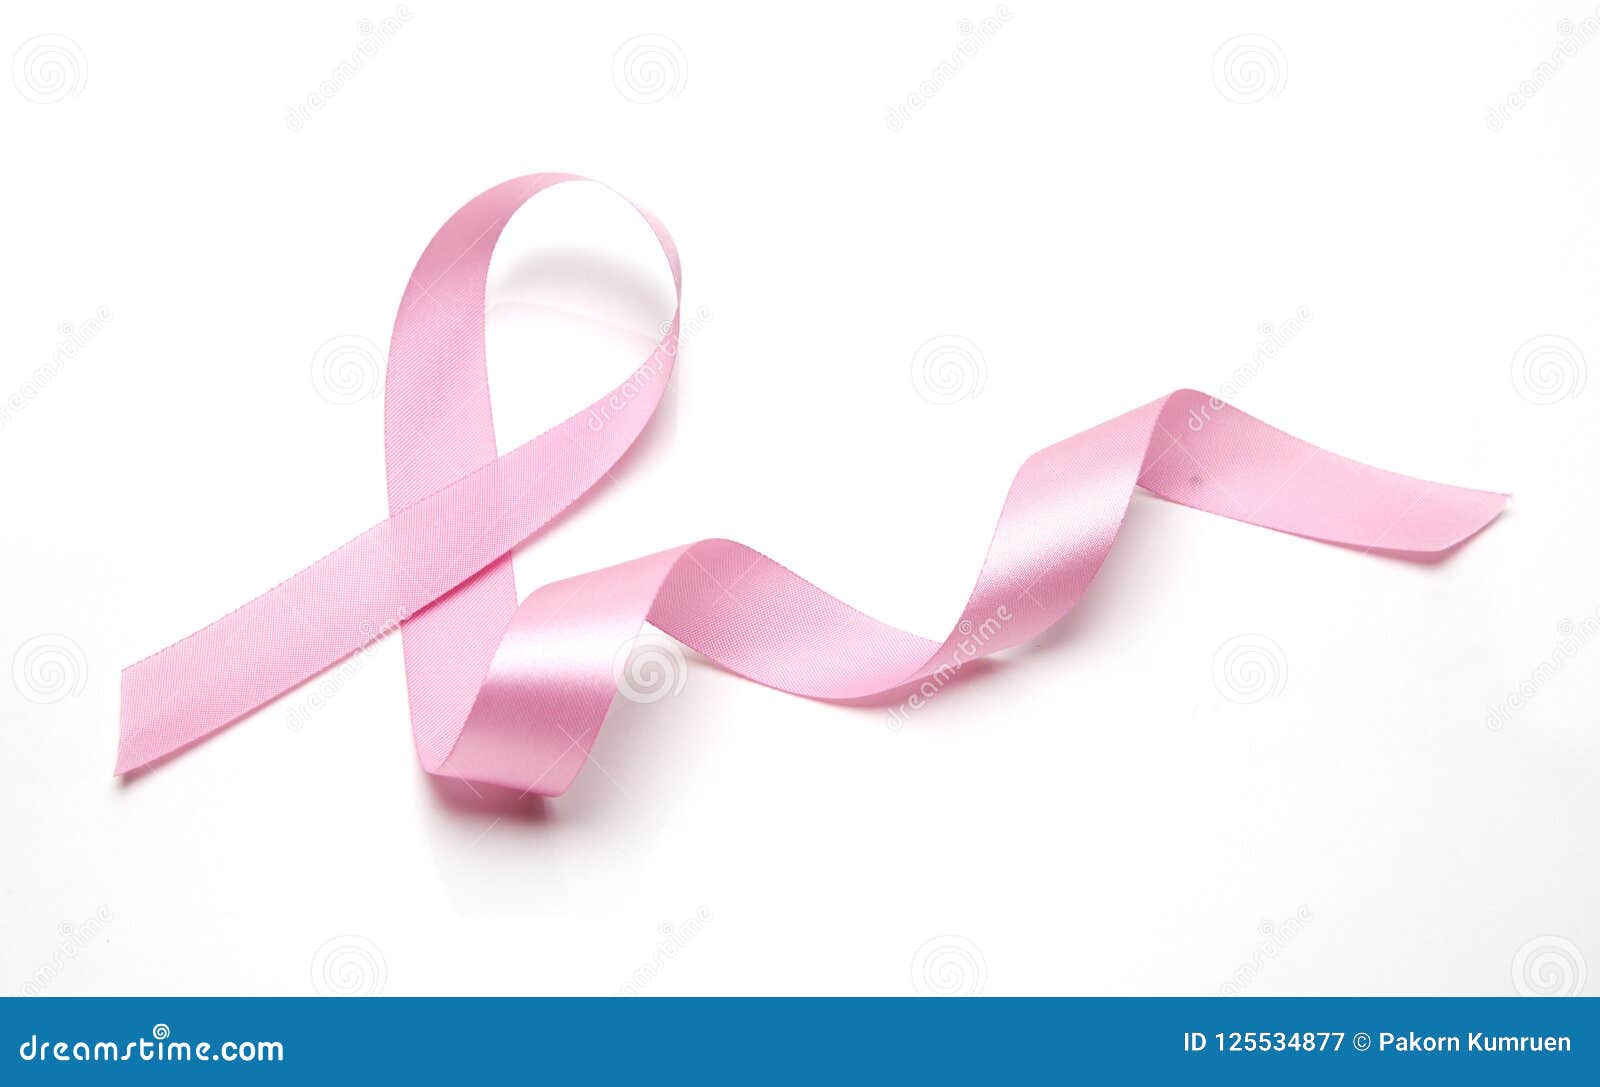 pink breast cancer ribbon